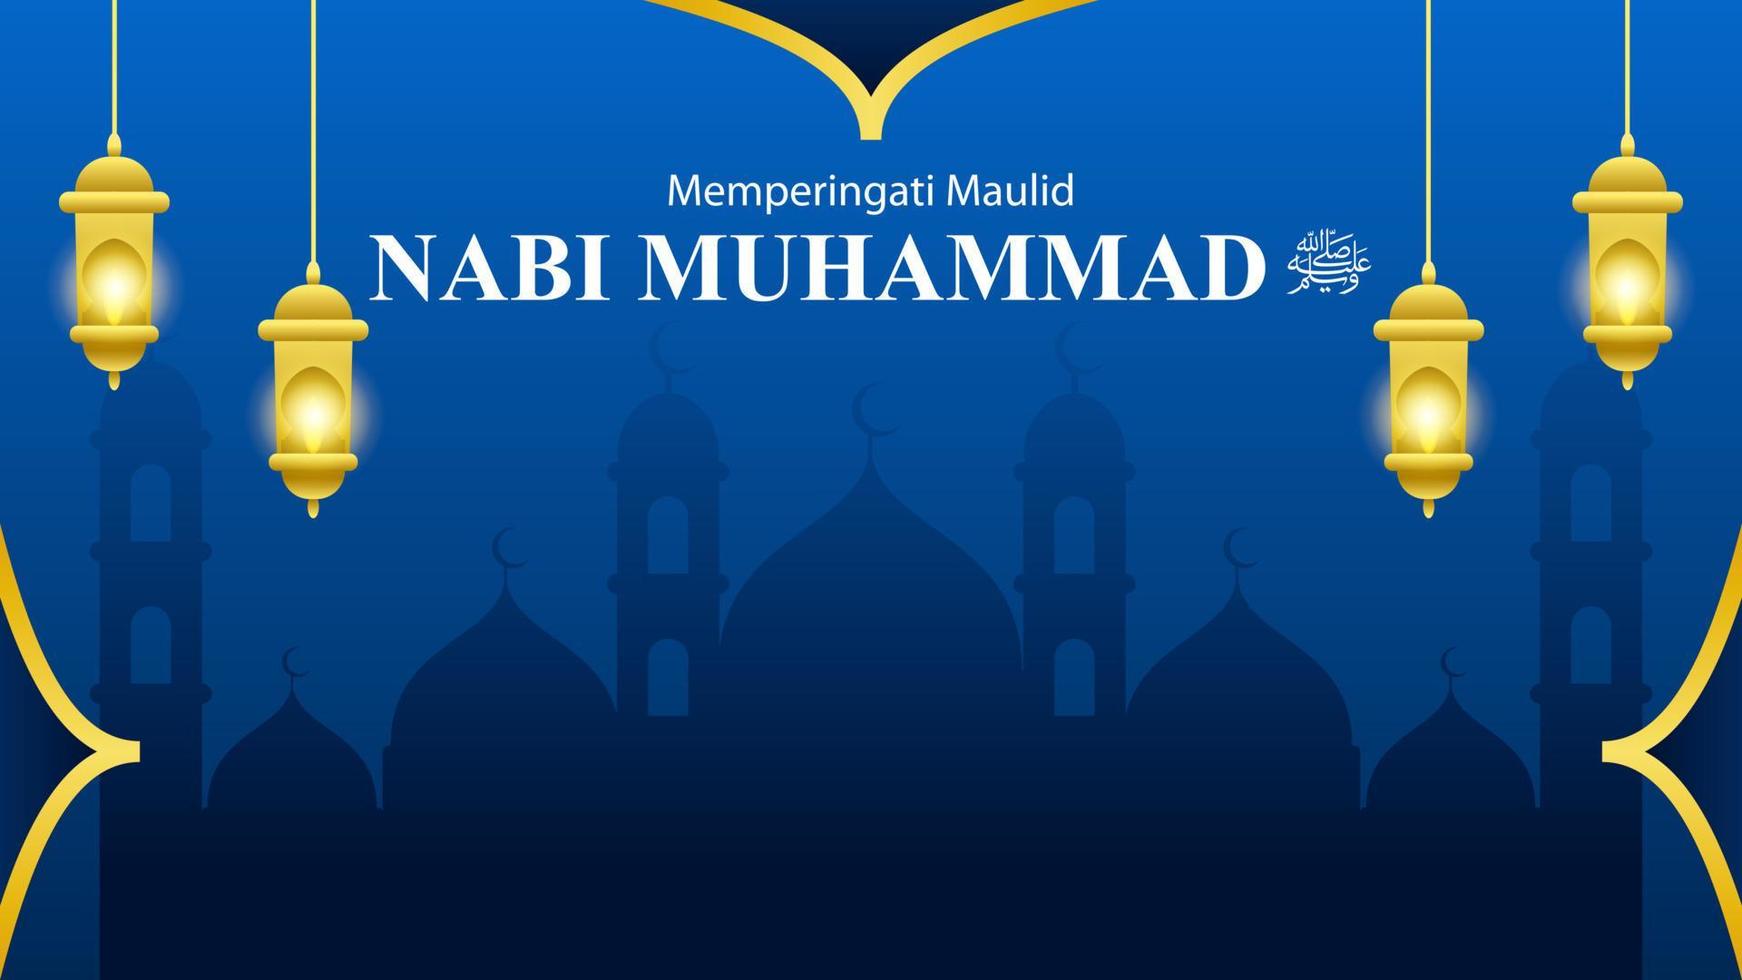 feliz mawlid nabi muhammad viu com mesquita em fundo azul vetor